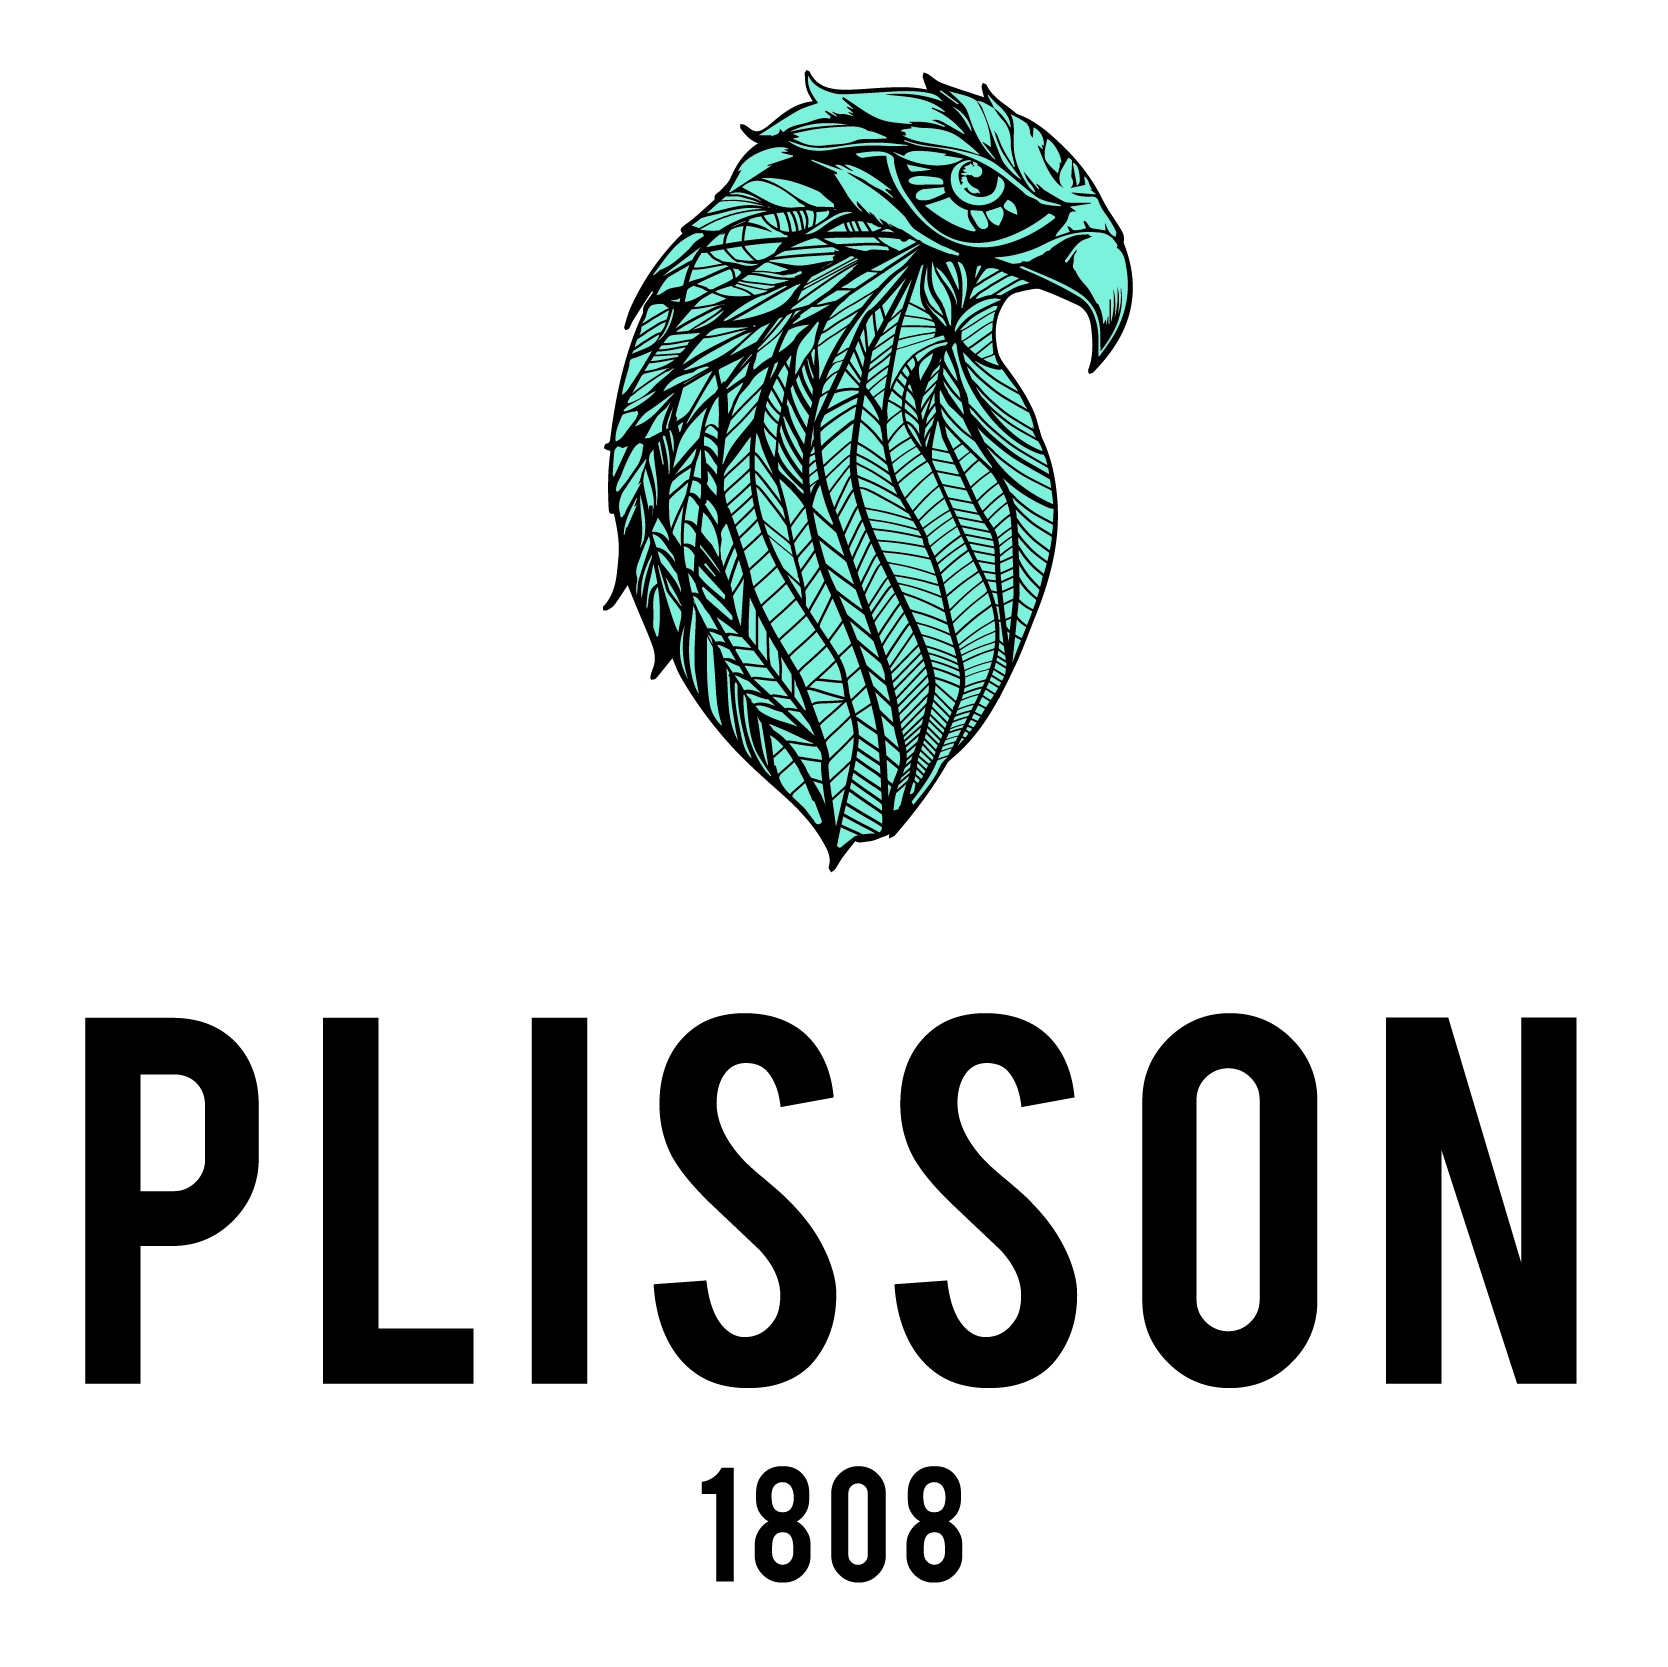 Vikim Diffusion (Plisson) - Breizh Invest PME